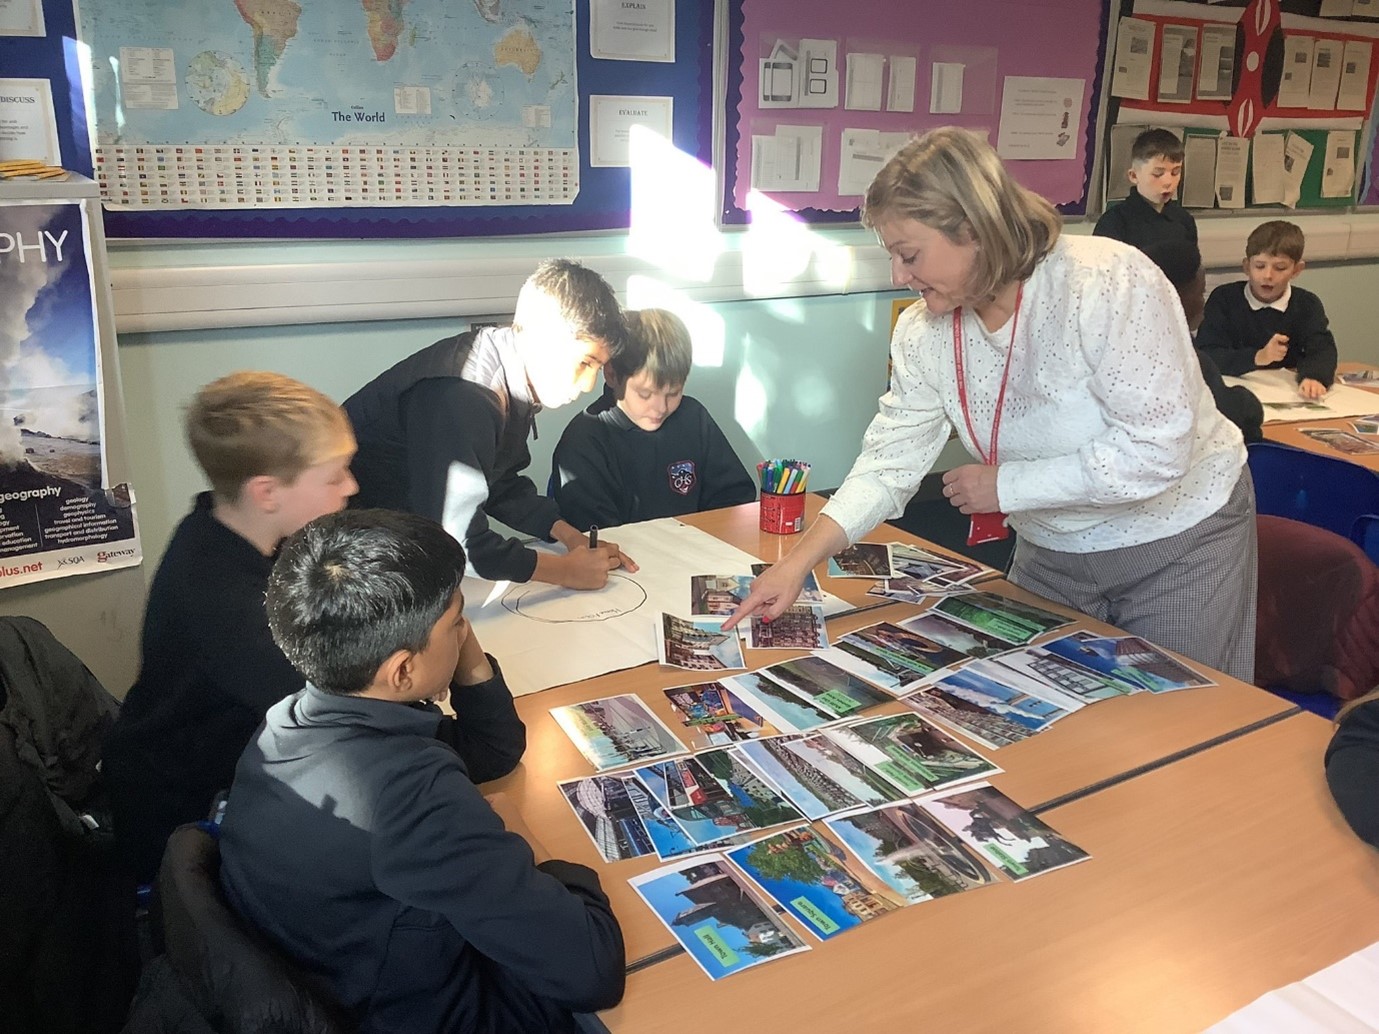 Children discuss their vision for the future of West Edinburgh.